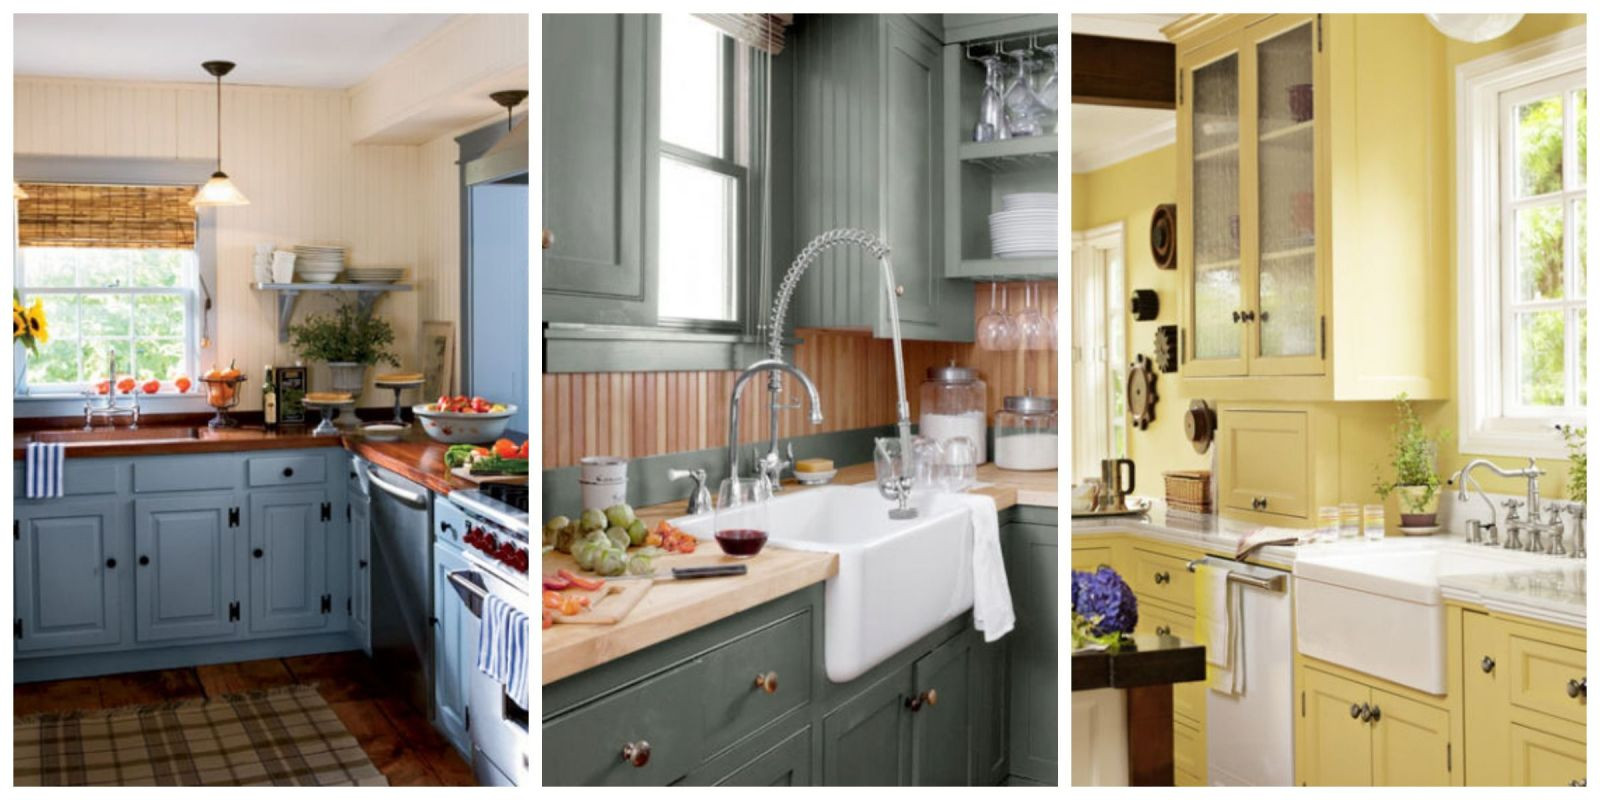 Small Kitchen Colour Ideas
 15 Best Kitchen Color Ideas Paint and Color Schemes for